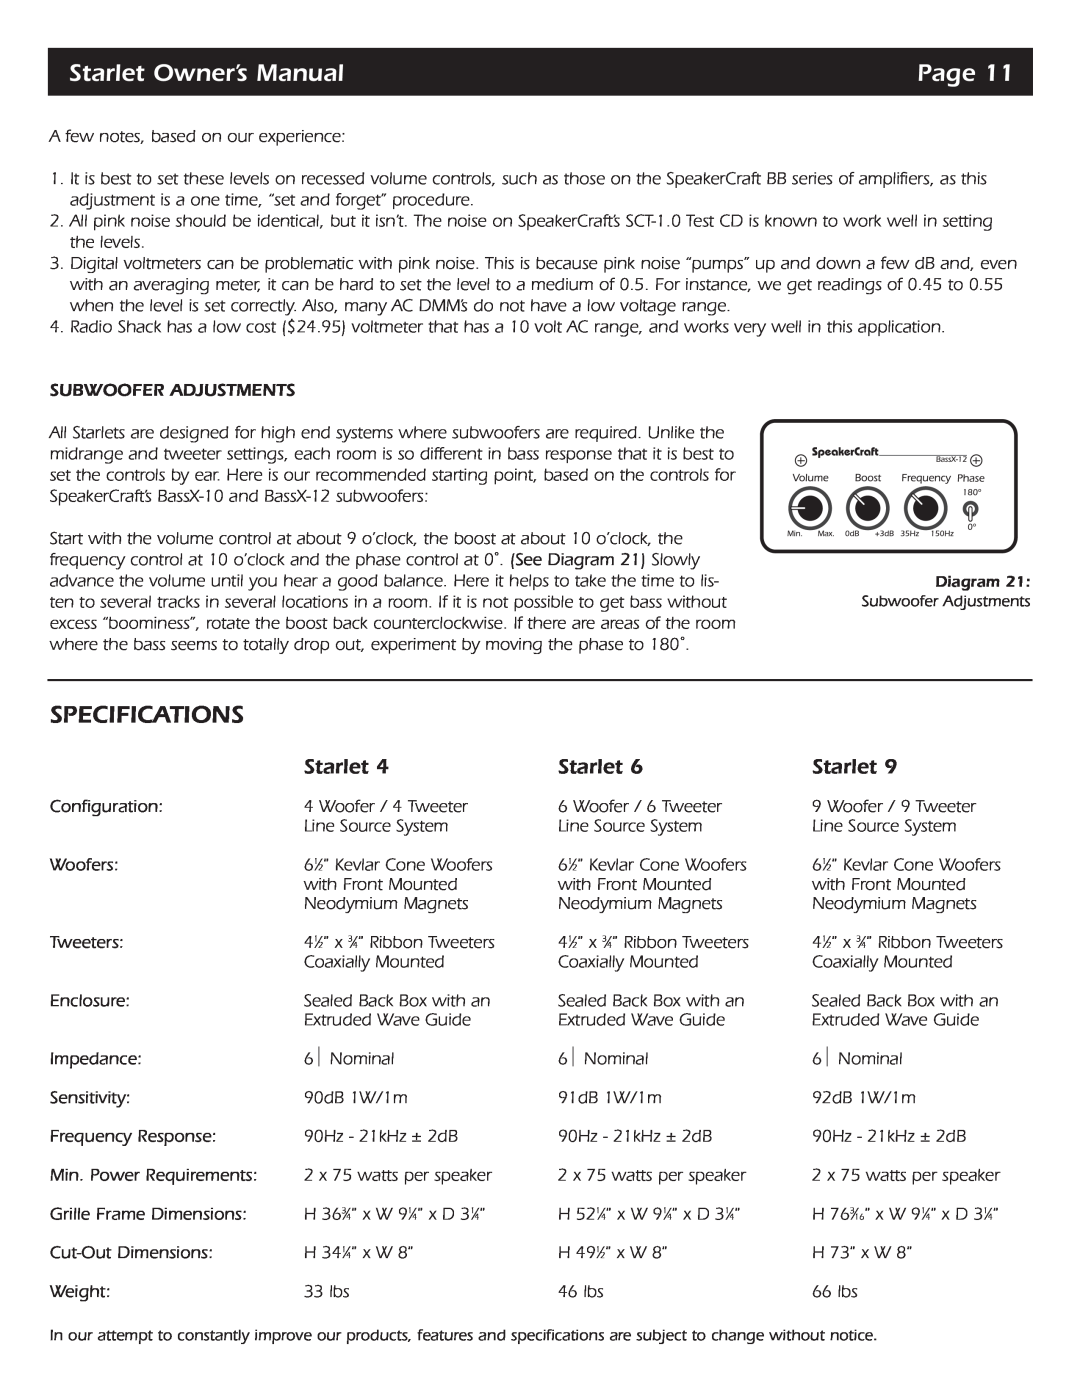 SpeakerCraft Starlet 9, Starlet 6, Starlet 4 owner manual Specifications, Page 